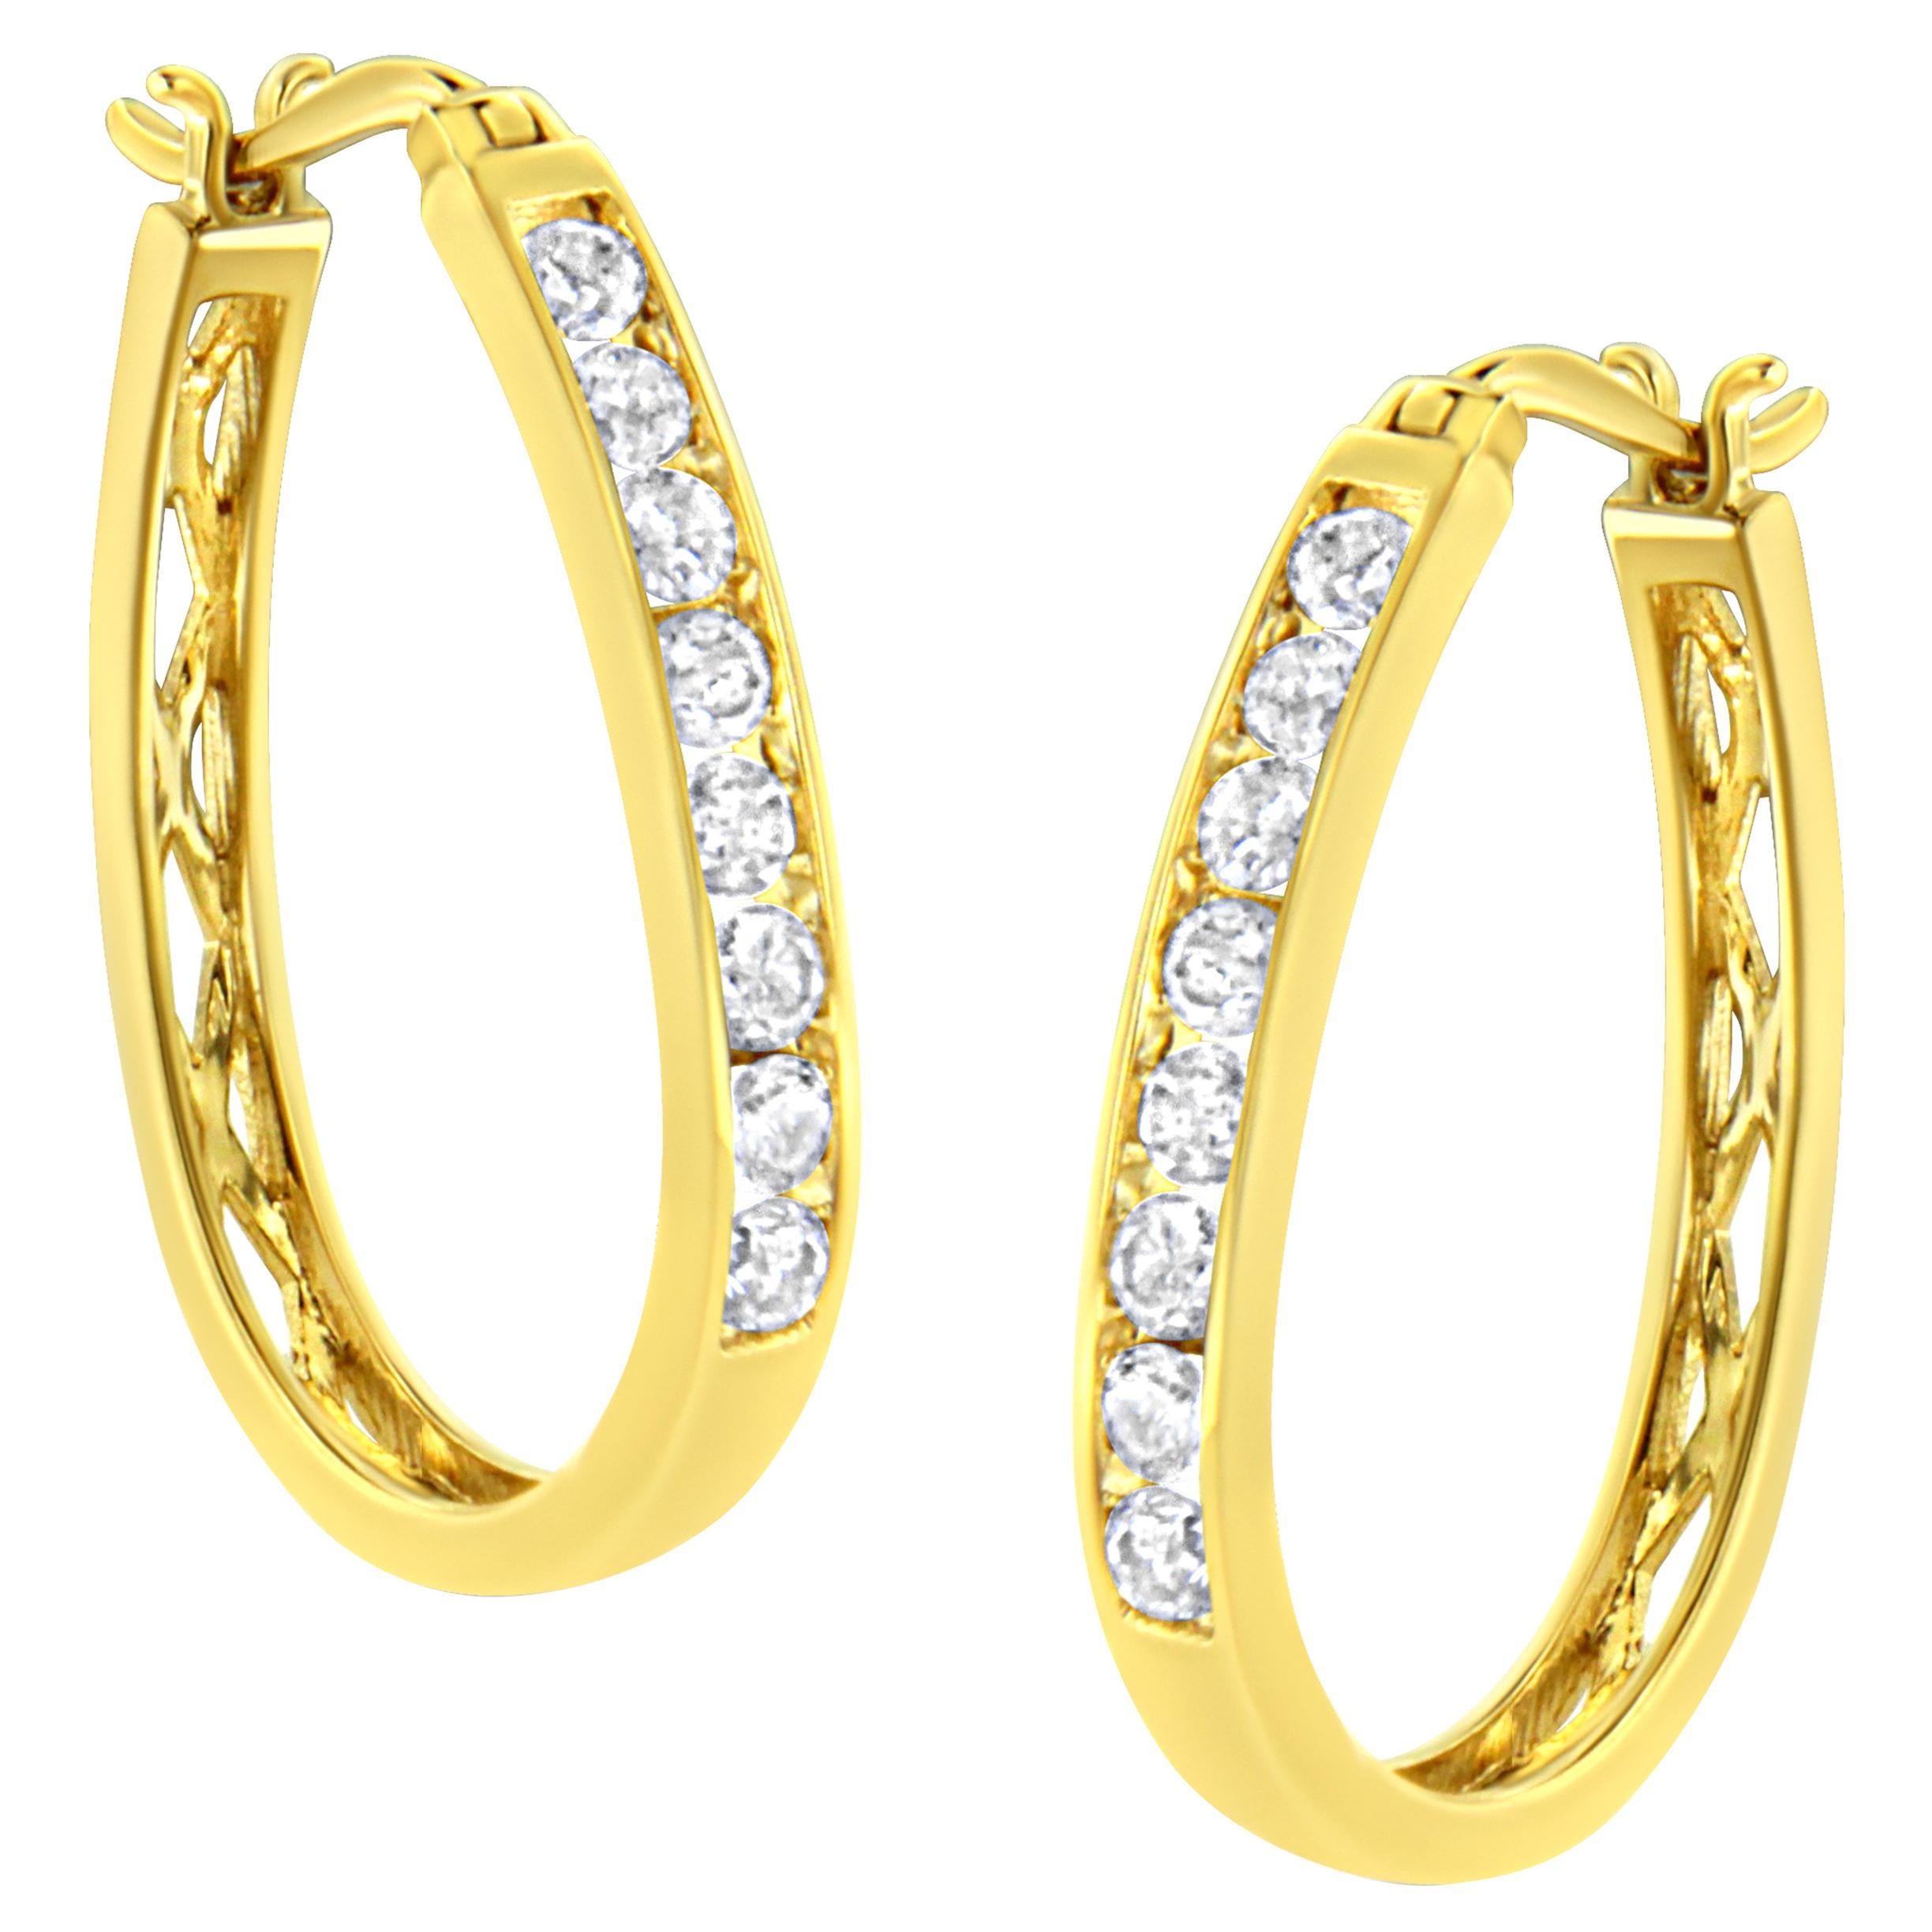 Yellow Gold Sterling Silver Diamond Earrings by 